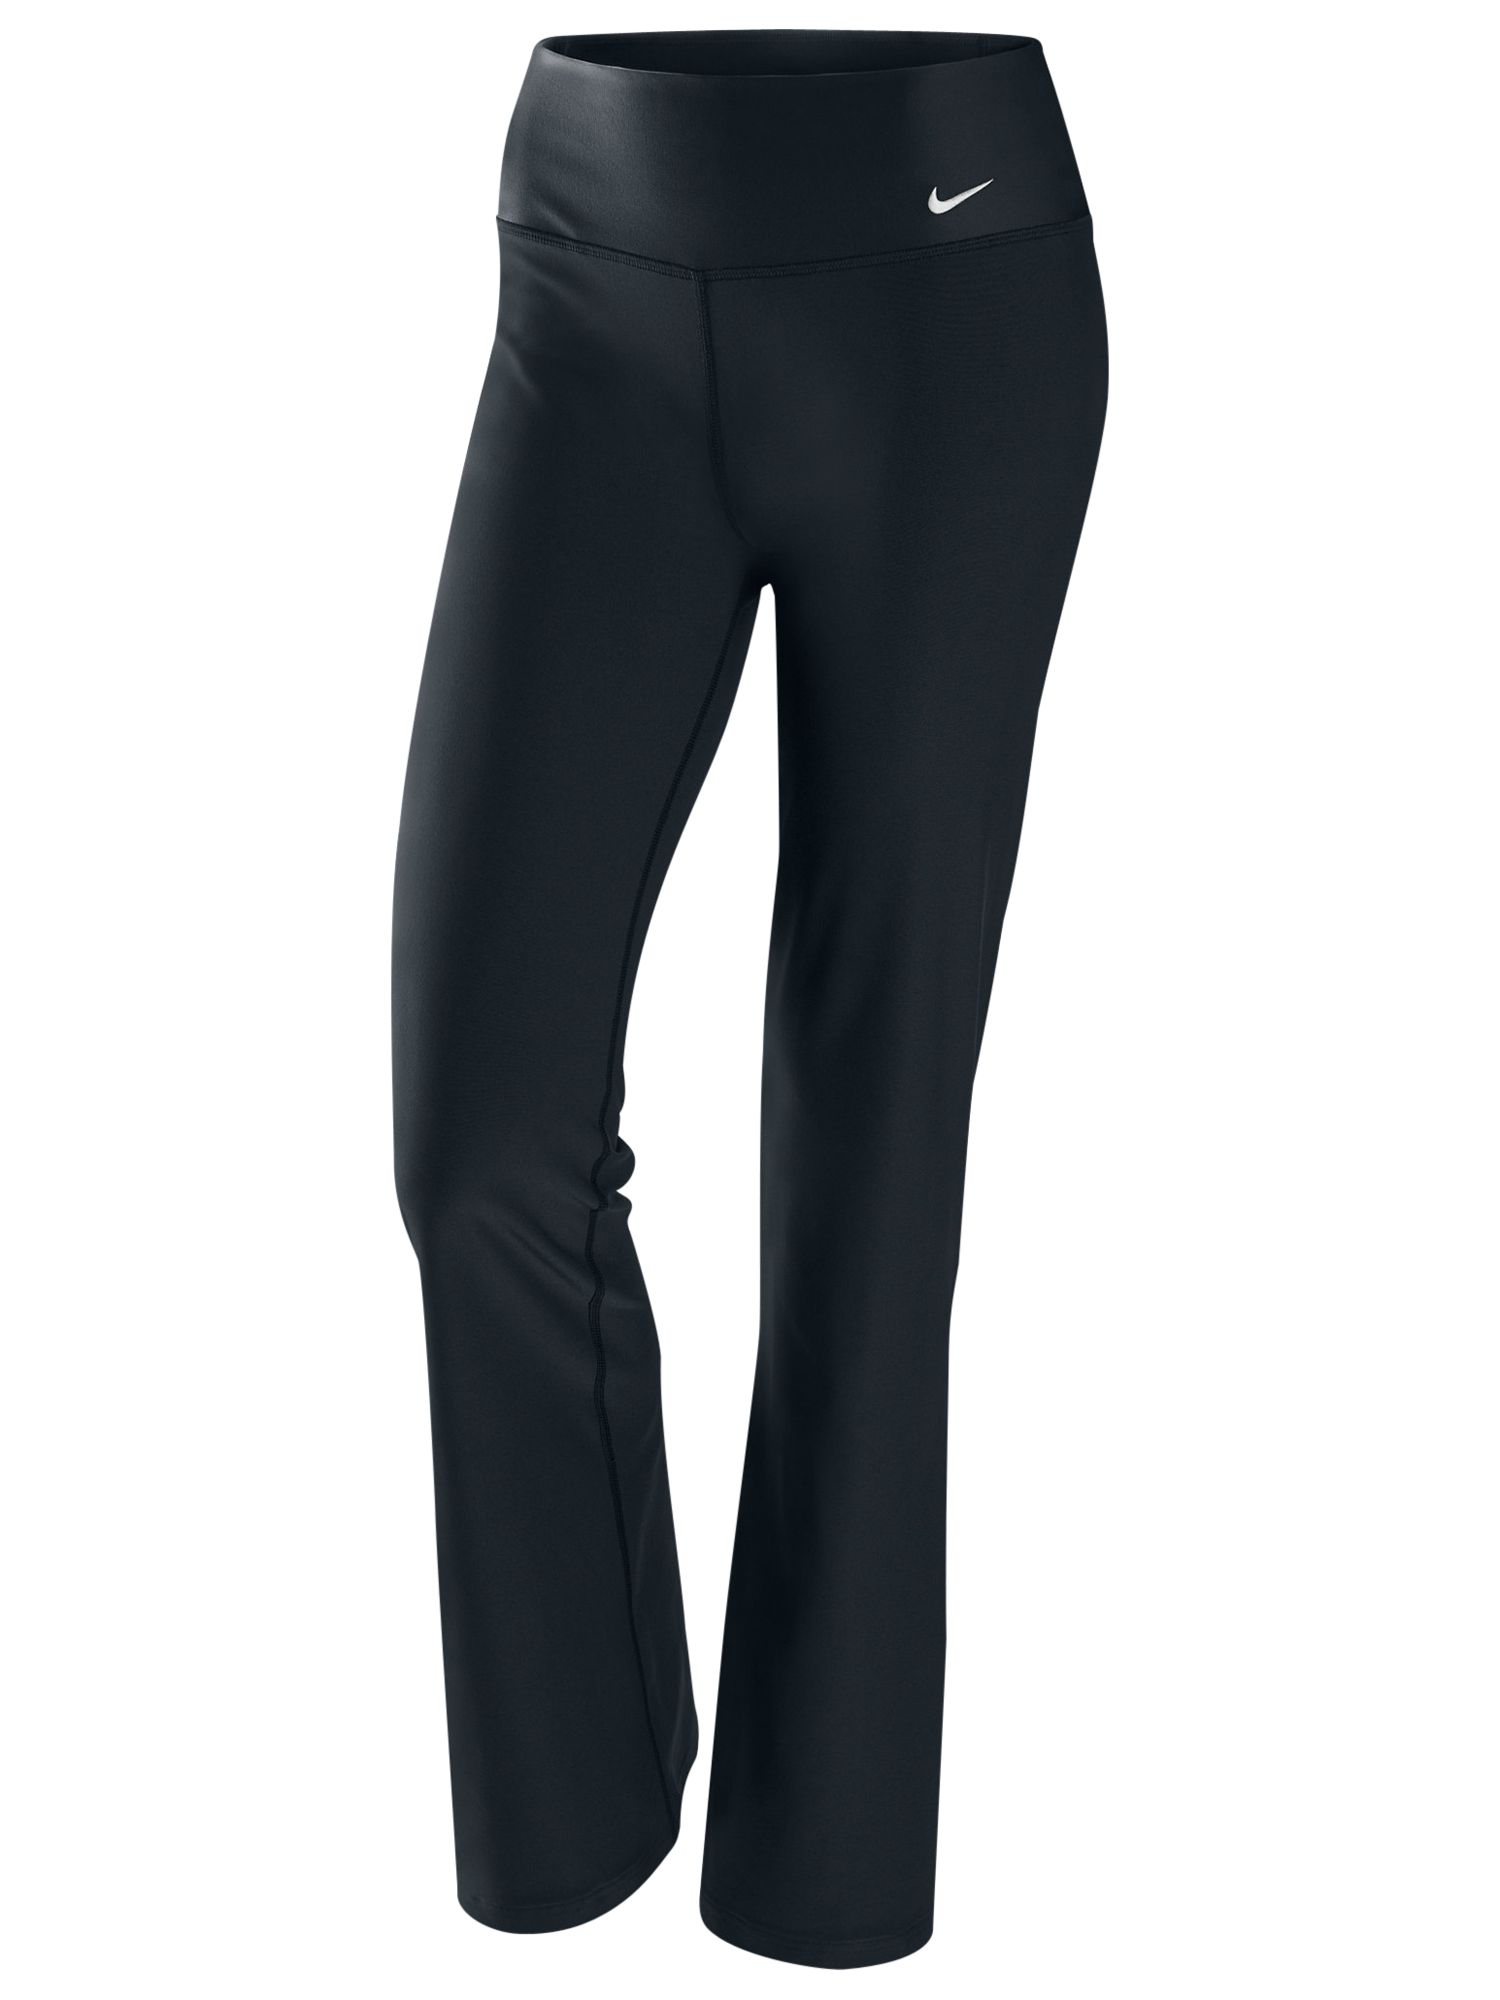 Nike Legend Slim Fit Trousers, Black/Cool Grey at John Lewis & Partners